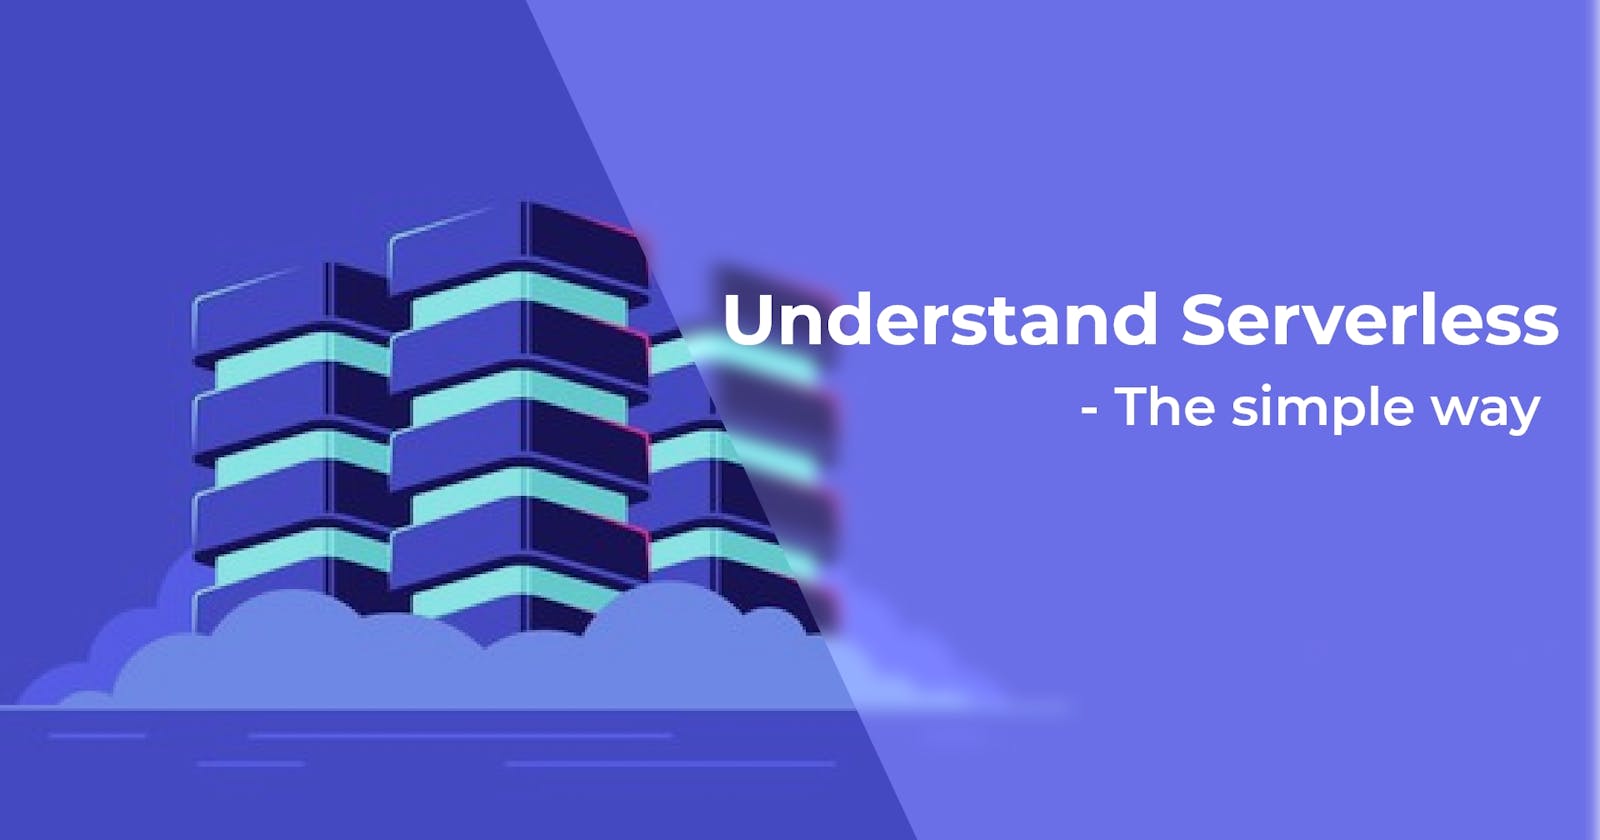 Understand Serverless - The Simple Way